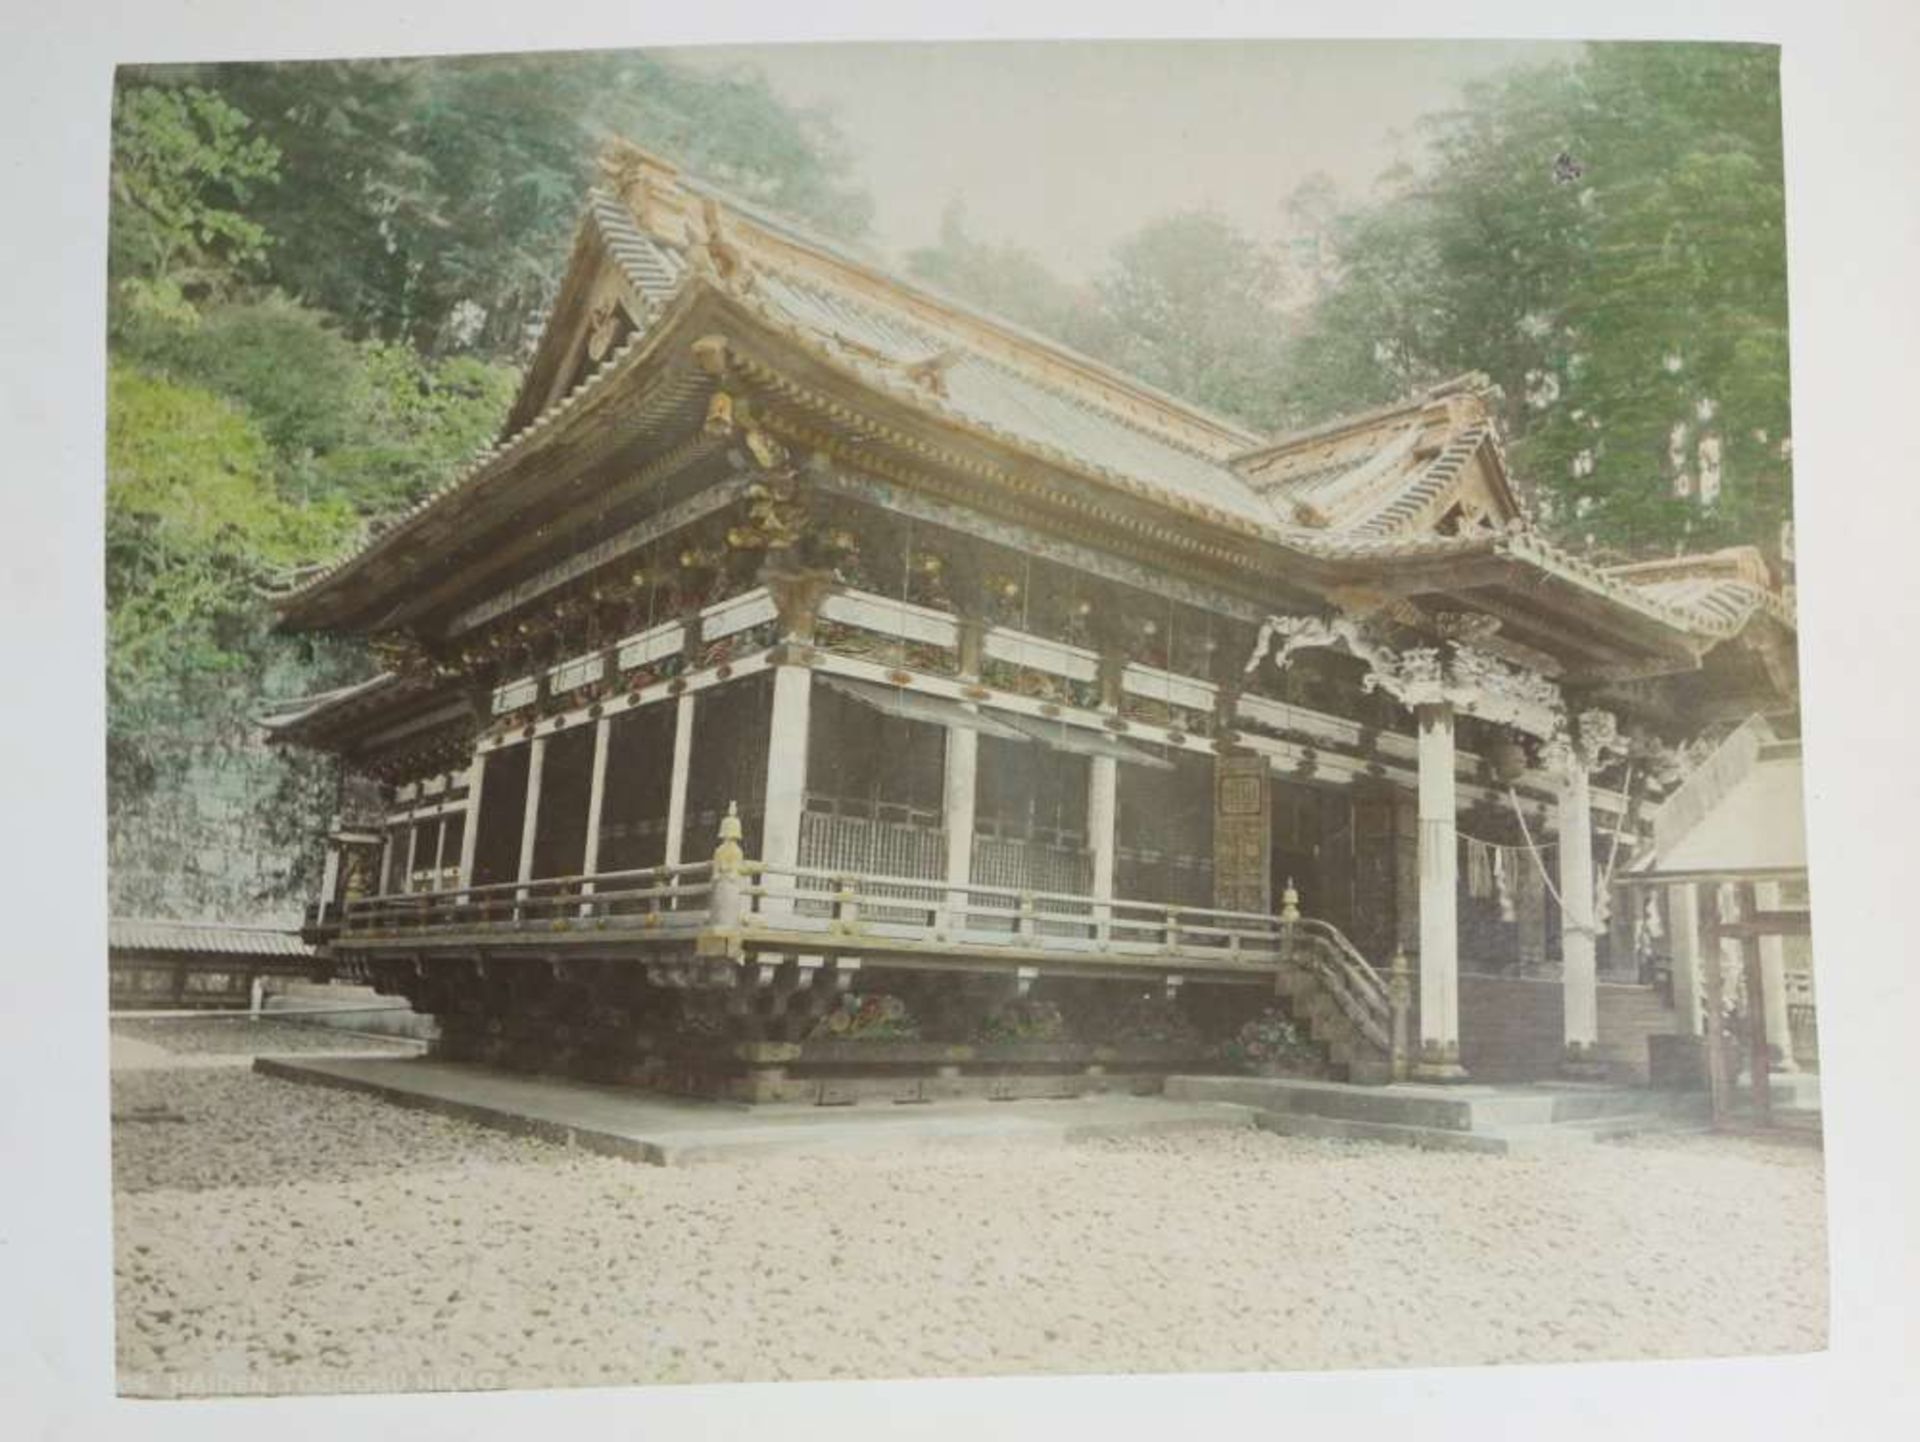 Japan, hervorragendes Fotoalbum, Japan um 1900, 50 handkolorierte Albumin-Abzüge. - Image 4 of 9